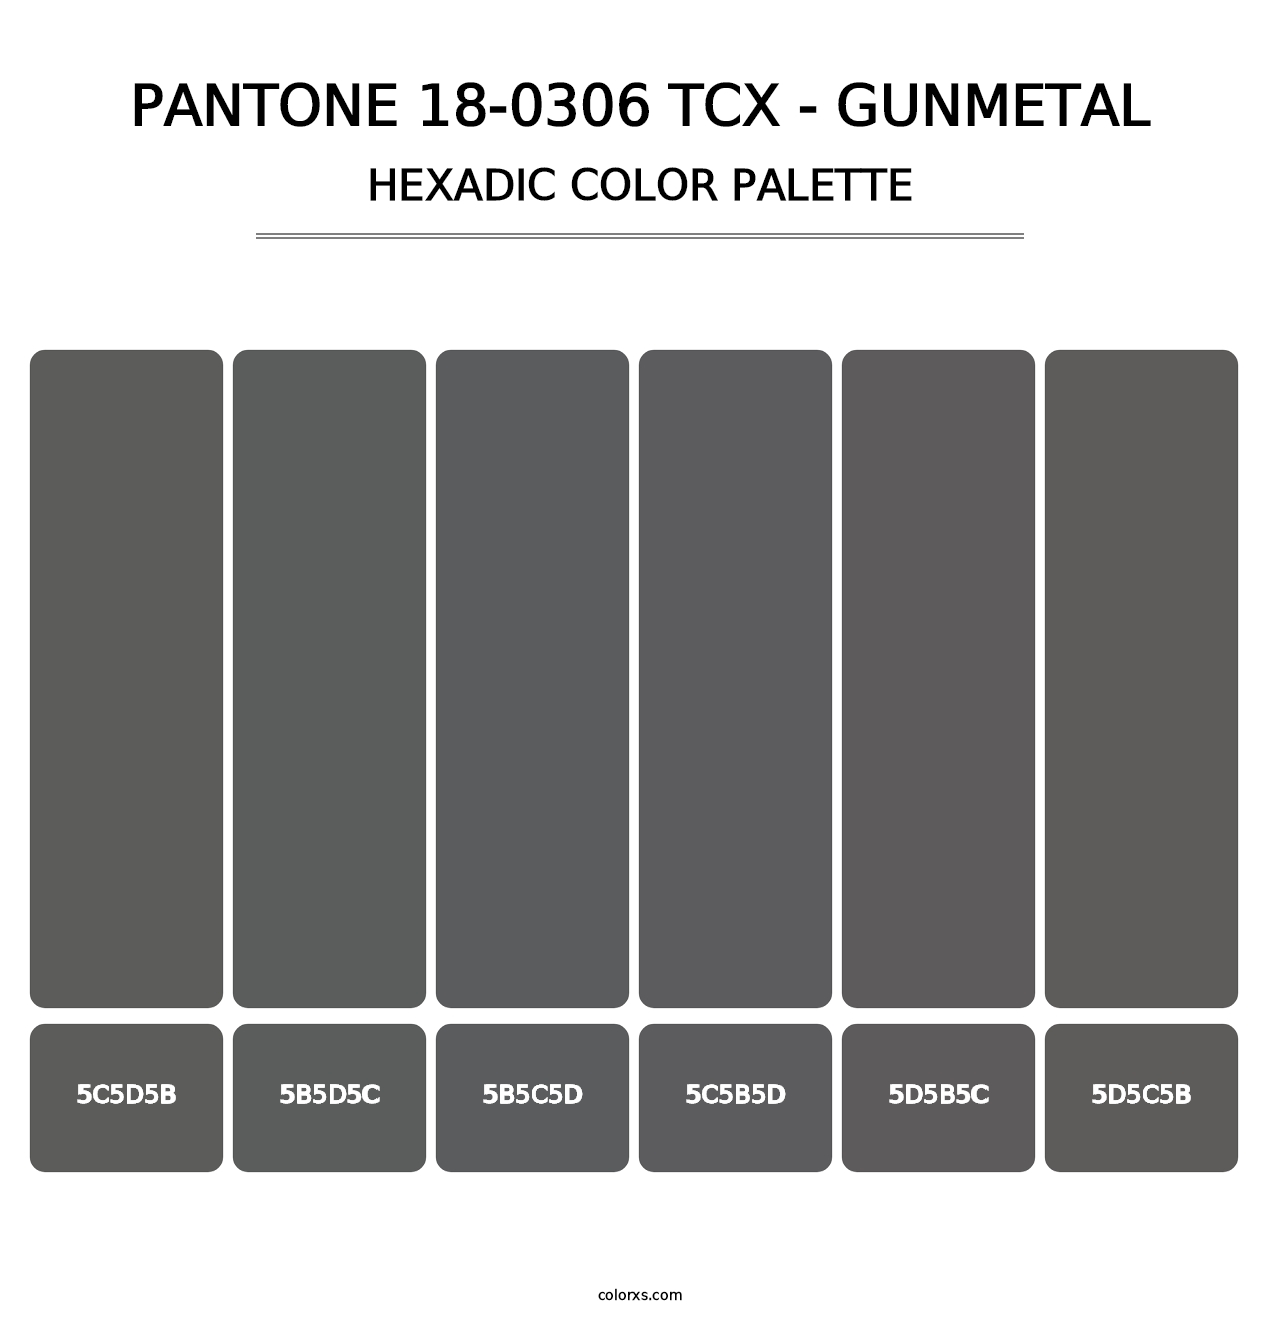 PANTONE 18-0306 TCX - Gunmetal - Hexadic Color Palette